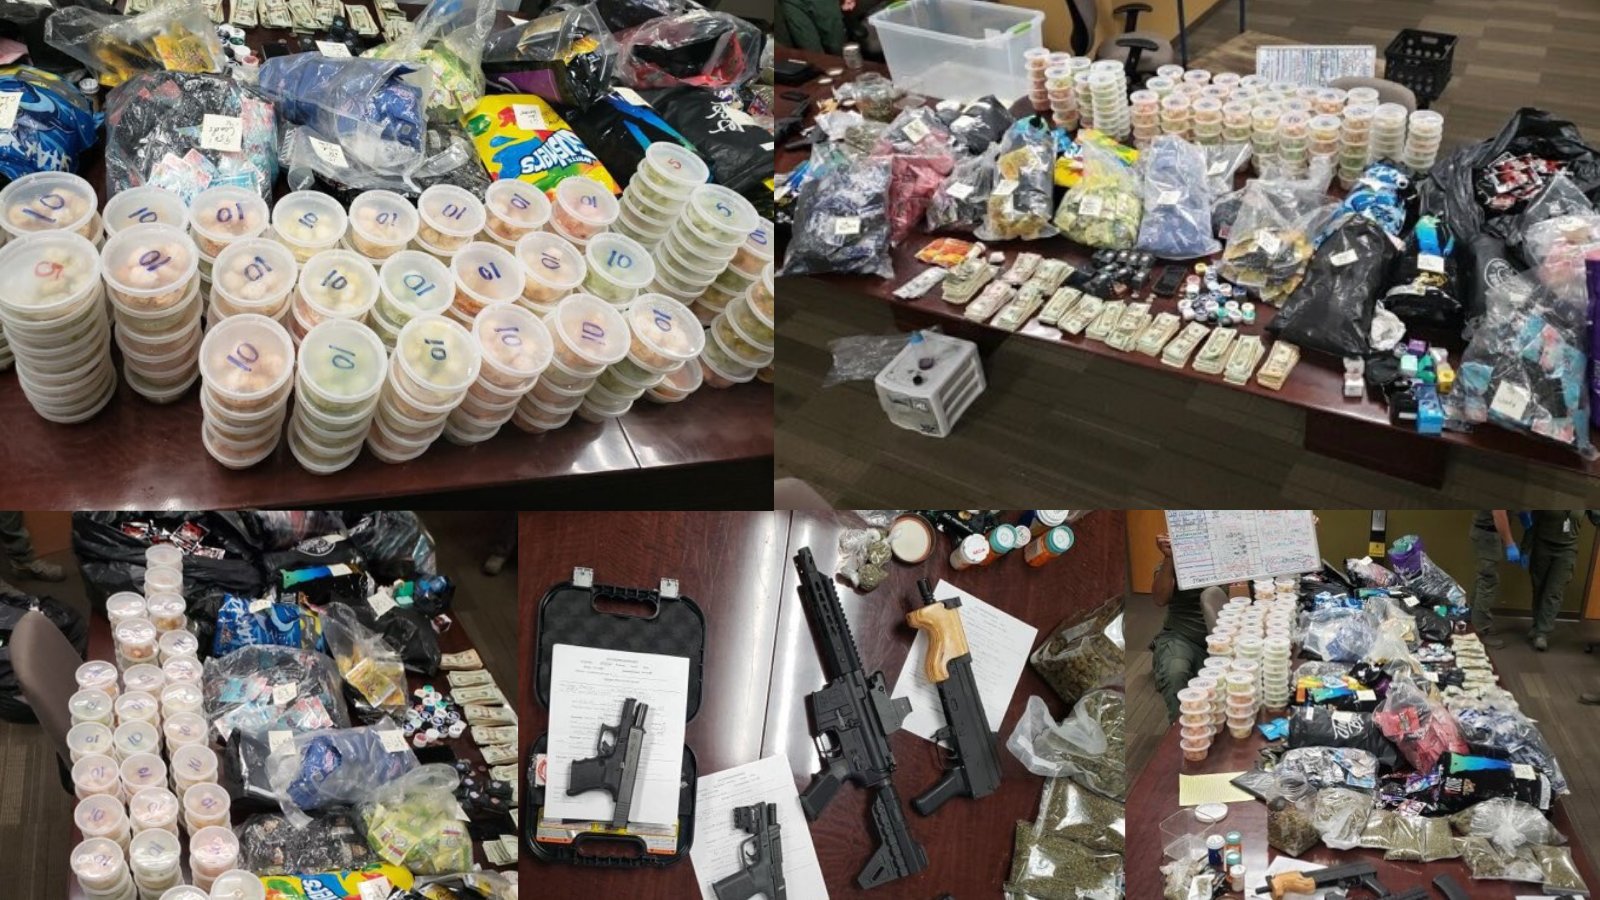 News Blog: $155,000 worth of drugs seized at Atlanta home